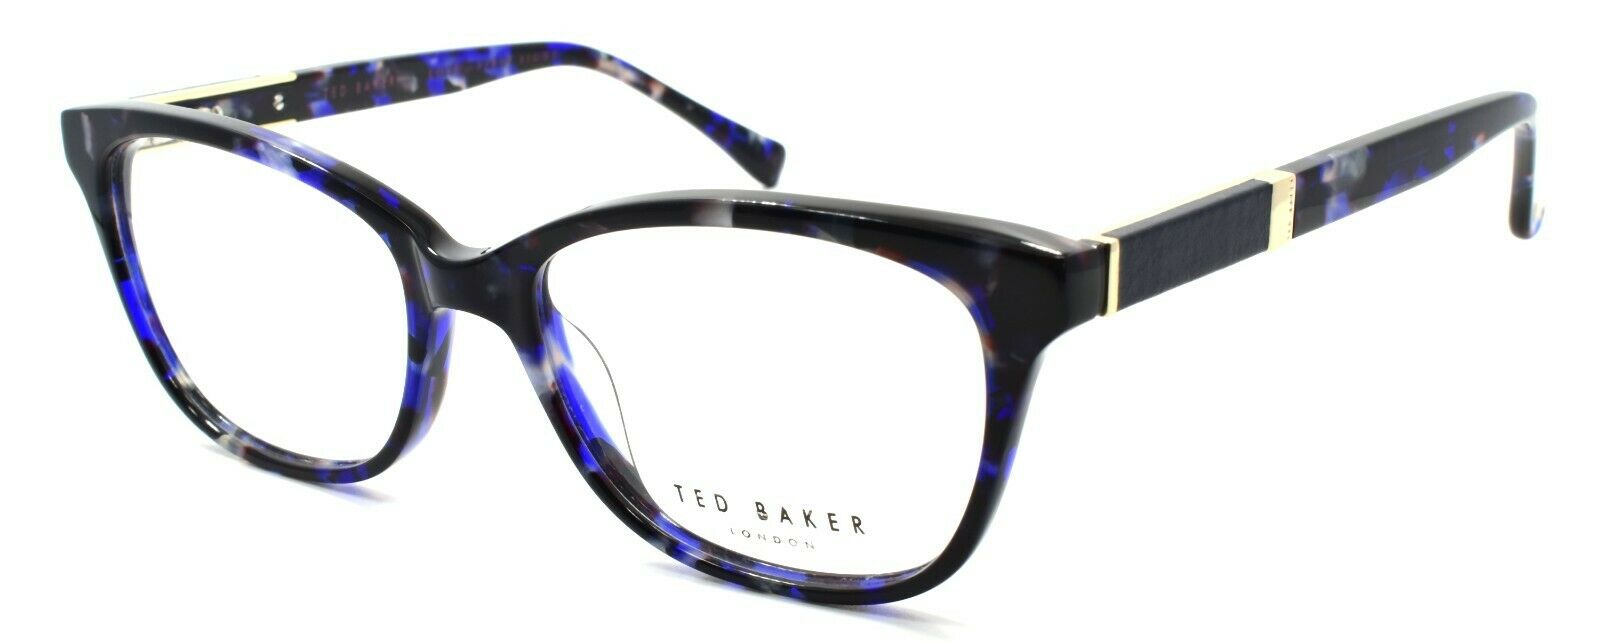 1-Ted Baker Senna 9124 693 Women's Eyeglasses Frames 52-16-140 Blue Marble-4894327143856-IKSpecs